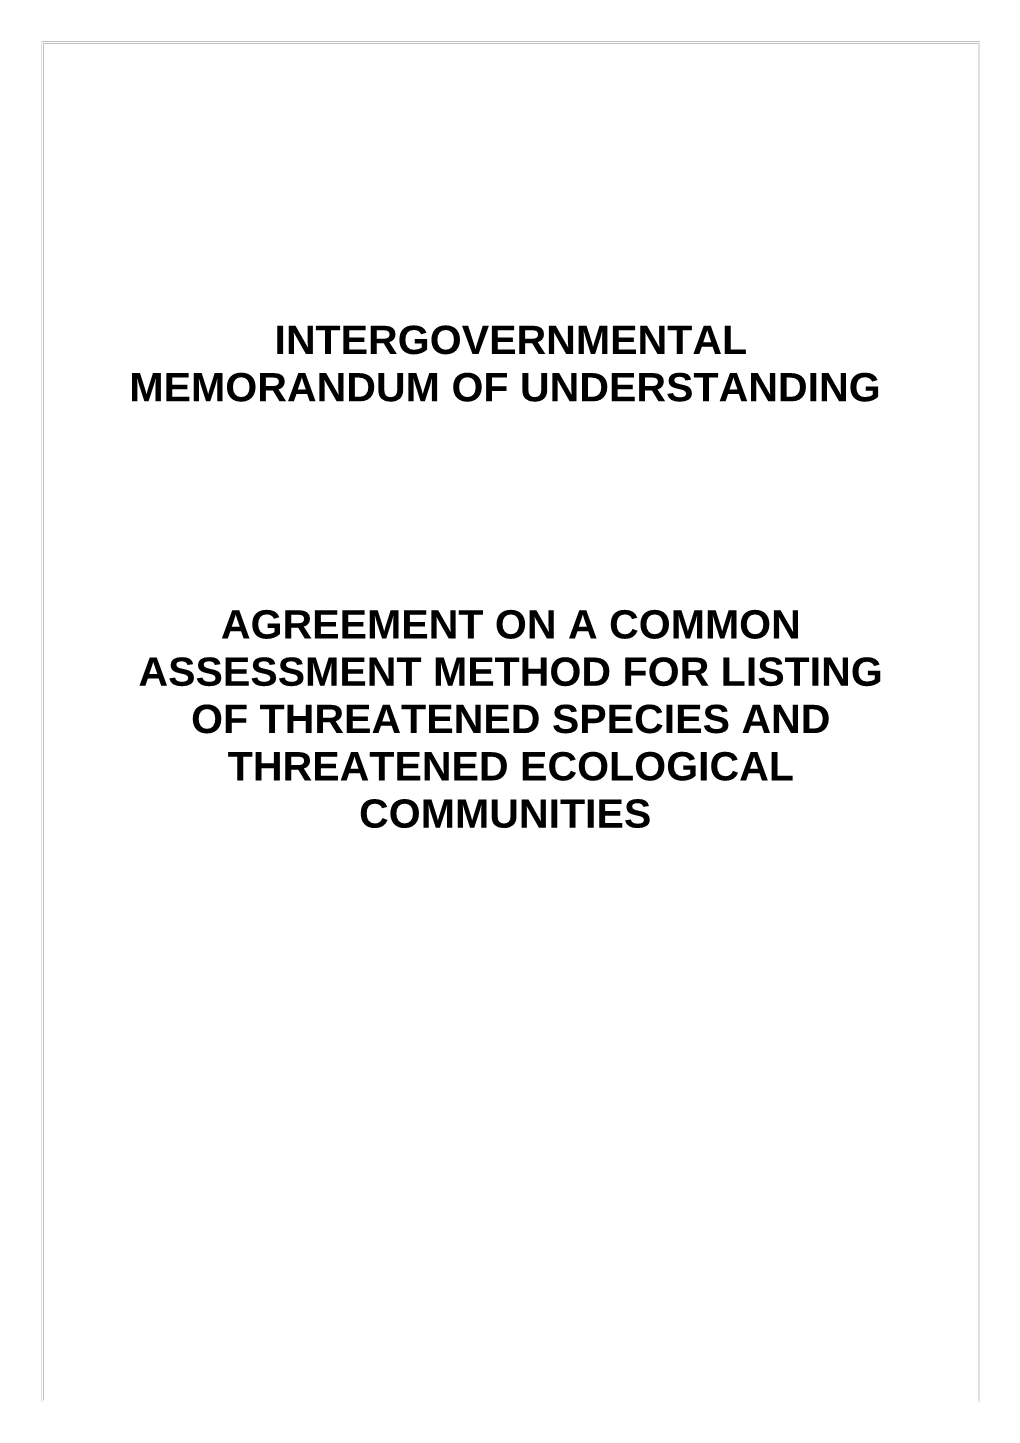 Intergovernmental Memorandum of Understanding - Agreement on a Common Assessment Method